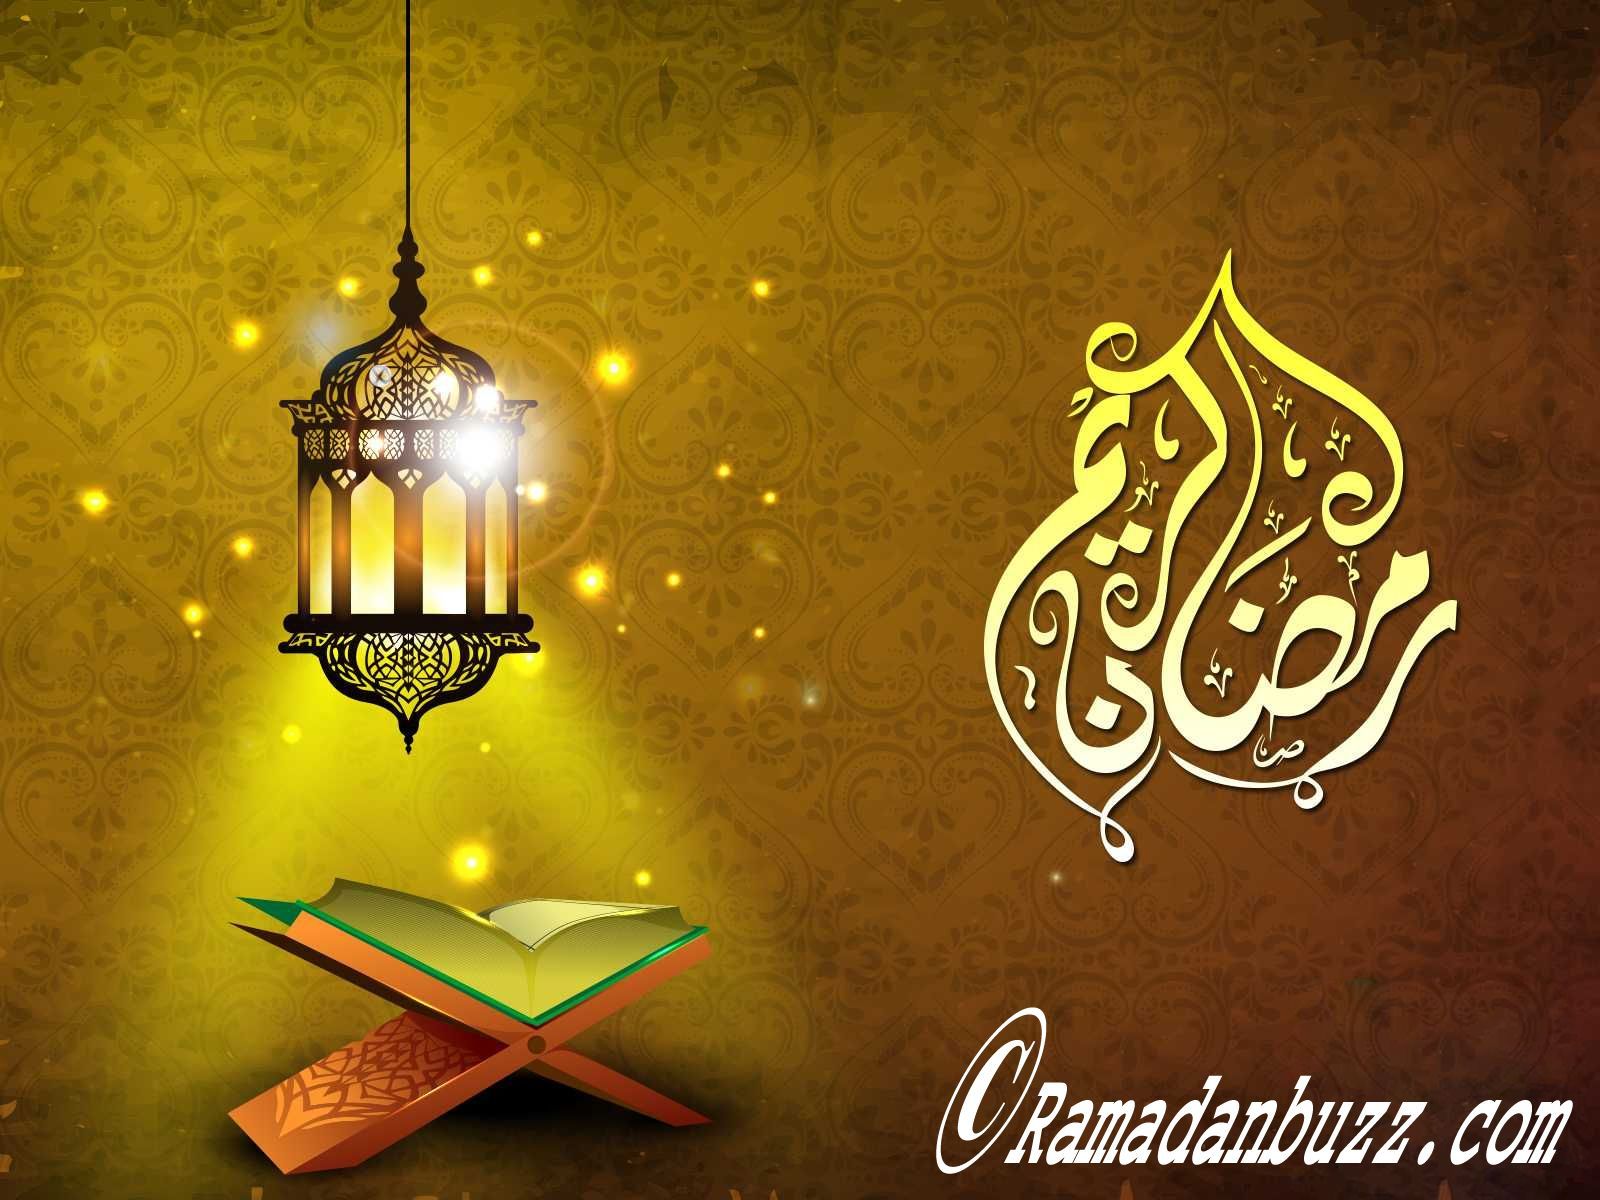 Ramadan Image Wallpaper HD, Ramzan image 2020. Ramadan image